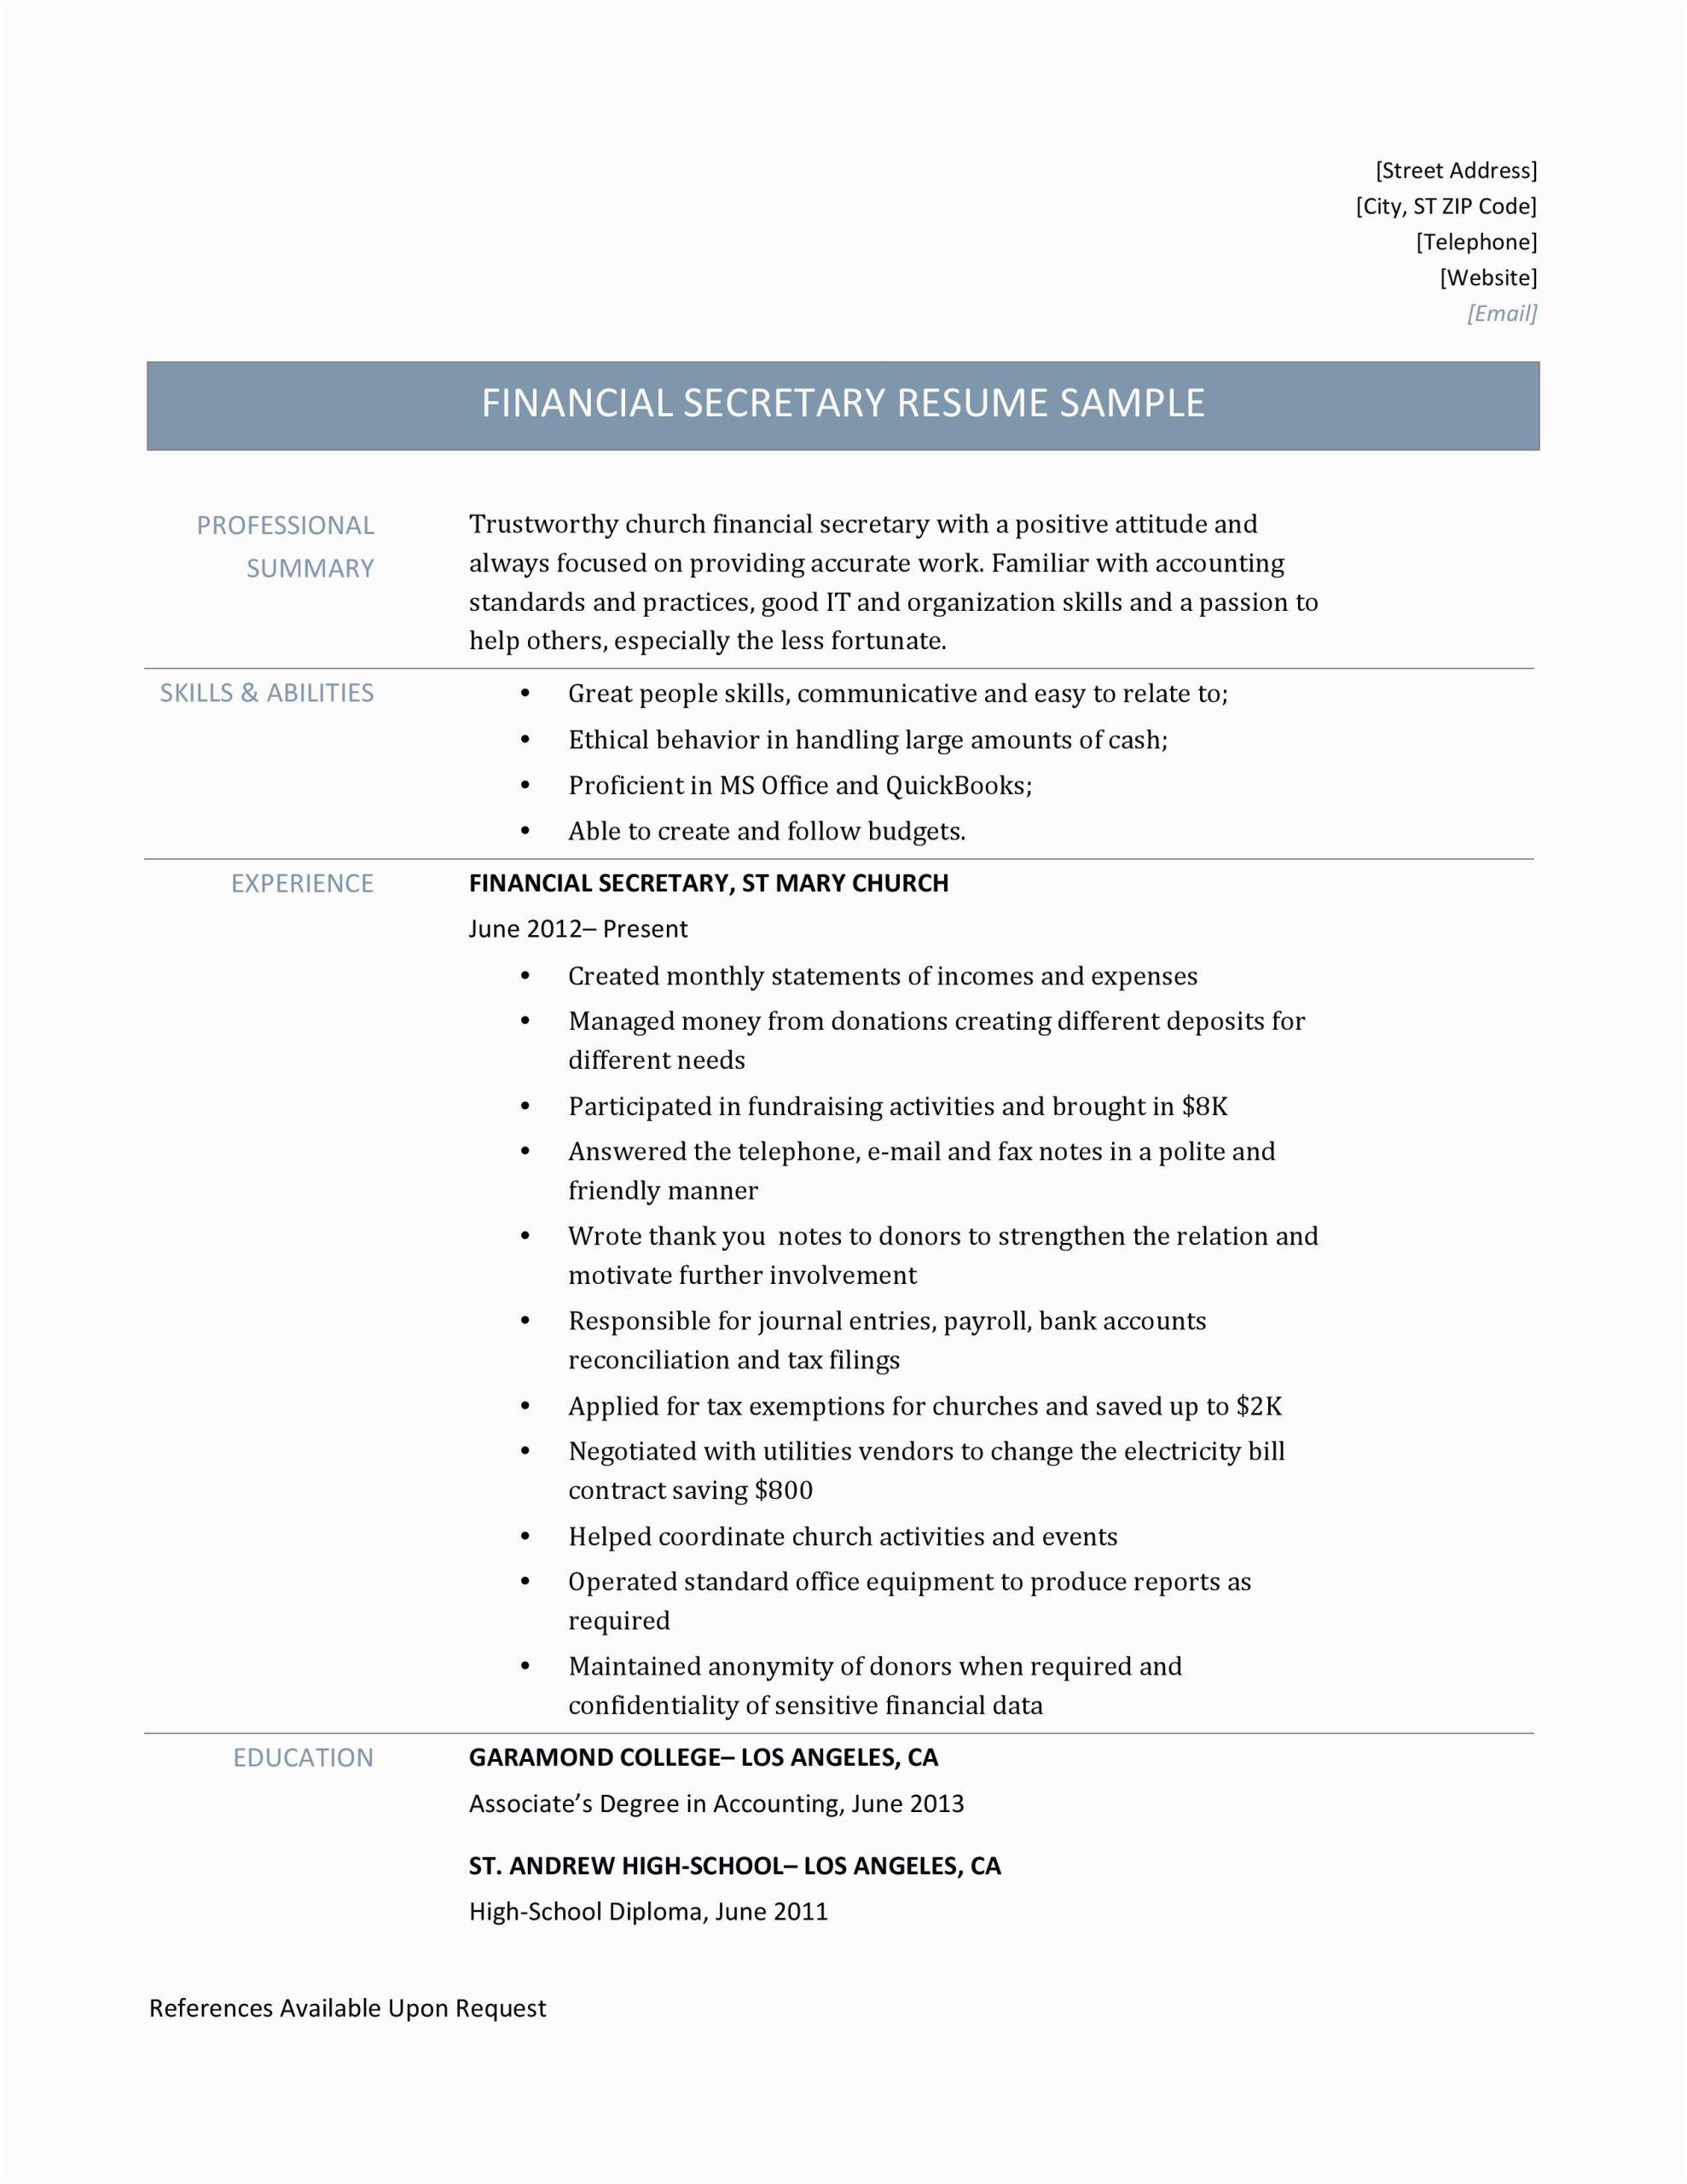 Sample Resumes for Financial Secretary Positions Financial Secretary Resume Sample by Line Resume Builders